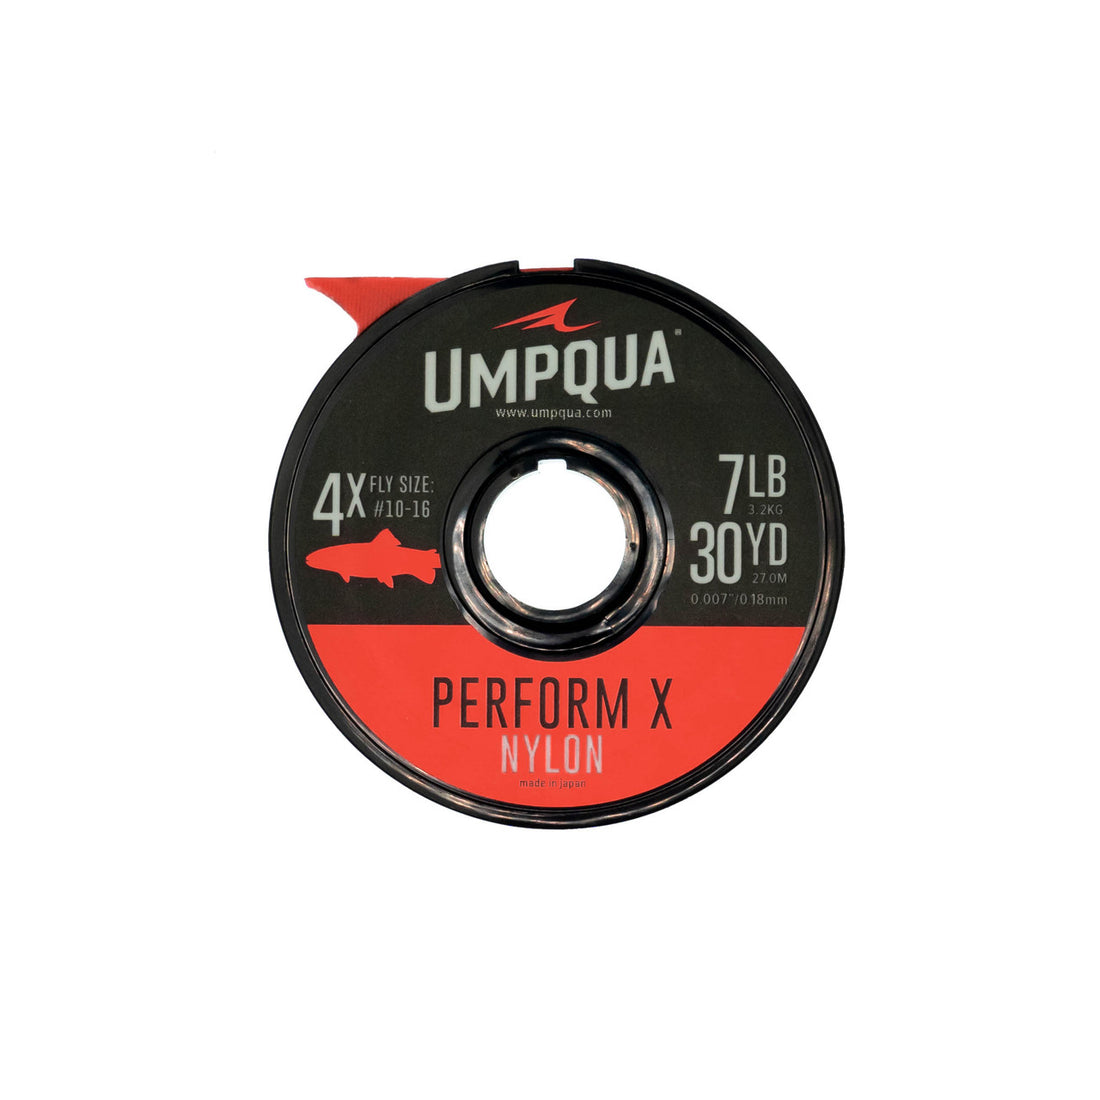 Umpqua Nylon Perform X Trout Tippet - 30Yd